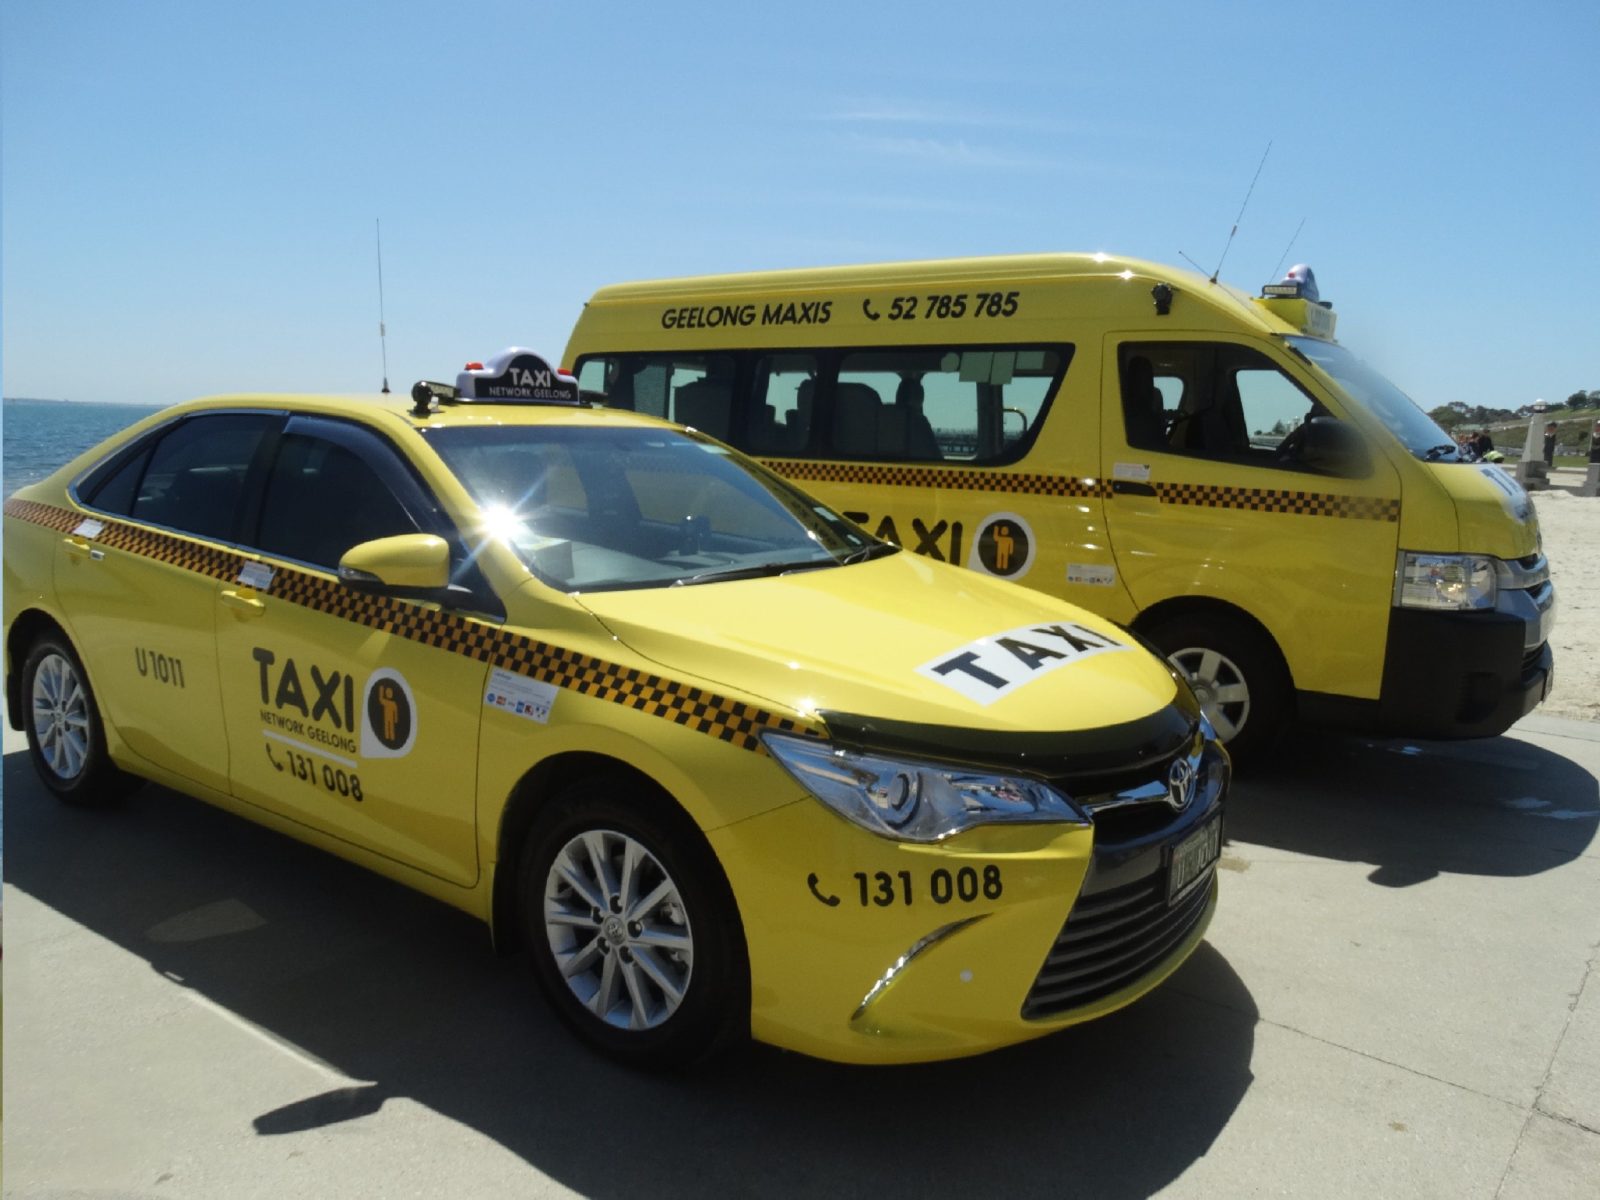 Taxi Network Geelong